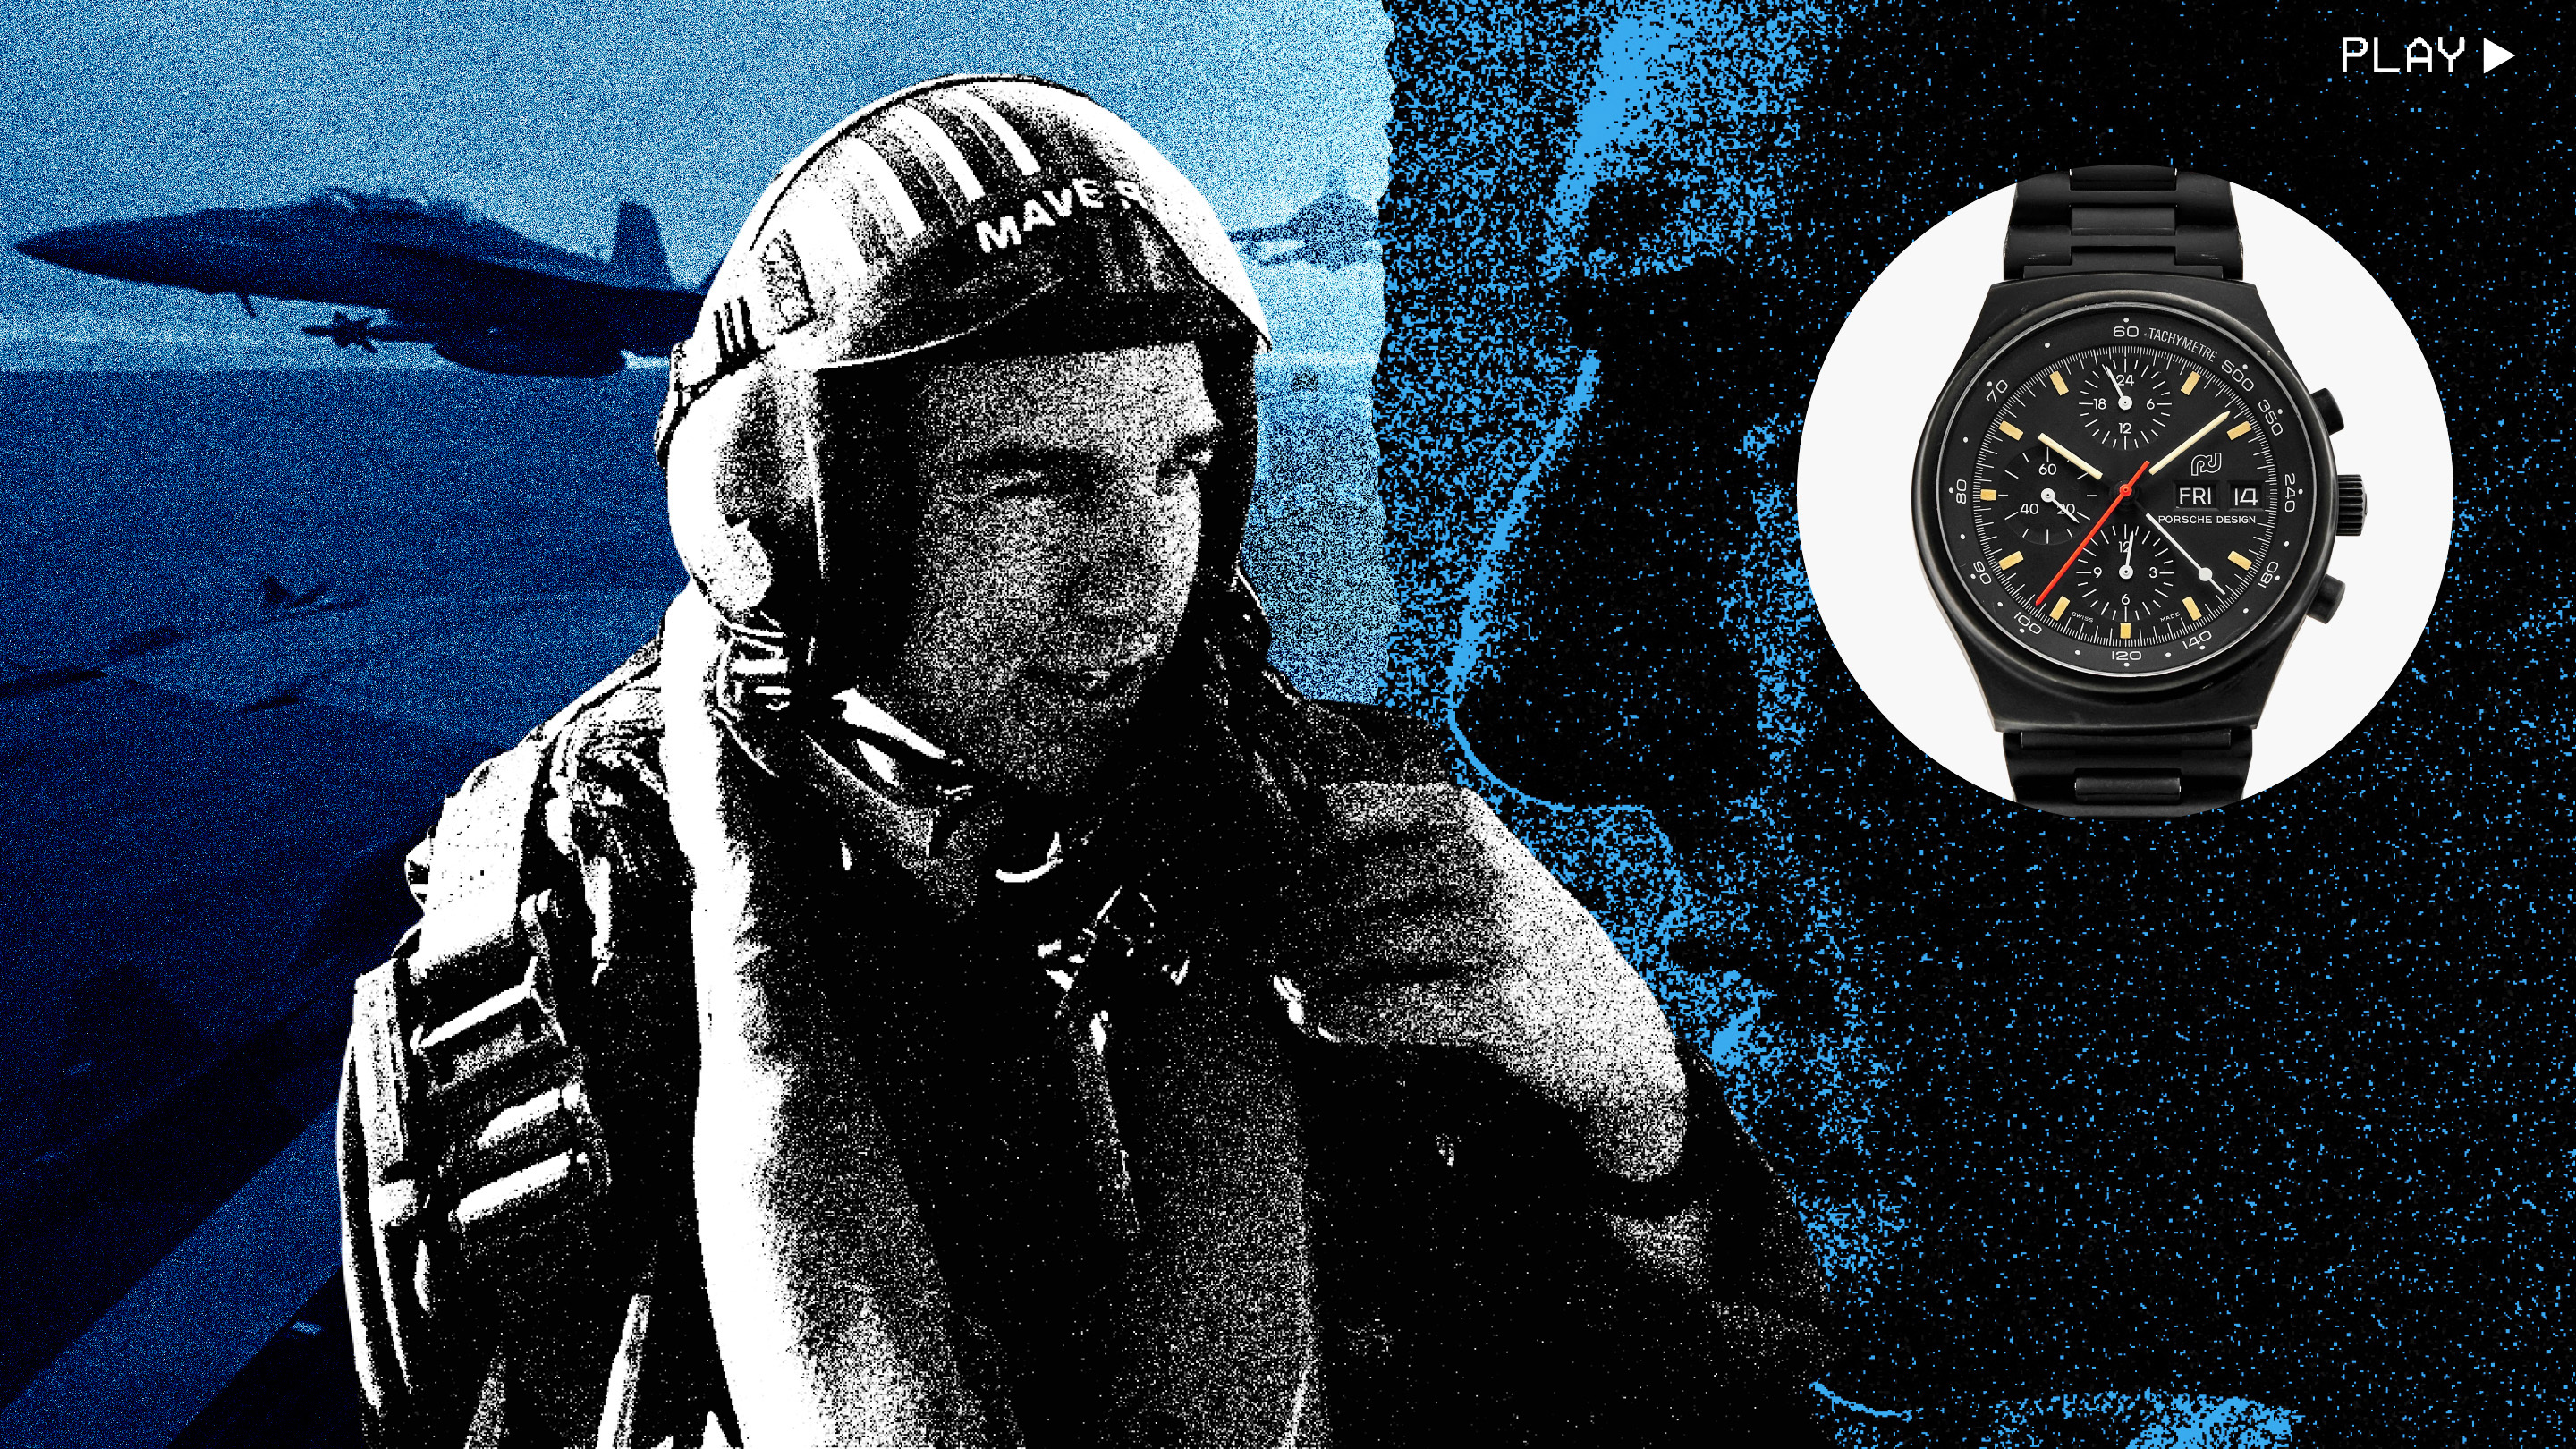 Top Gun: Maverick Brings Back Tom Cruise's Iconic Wristwatch